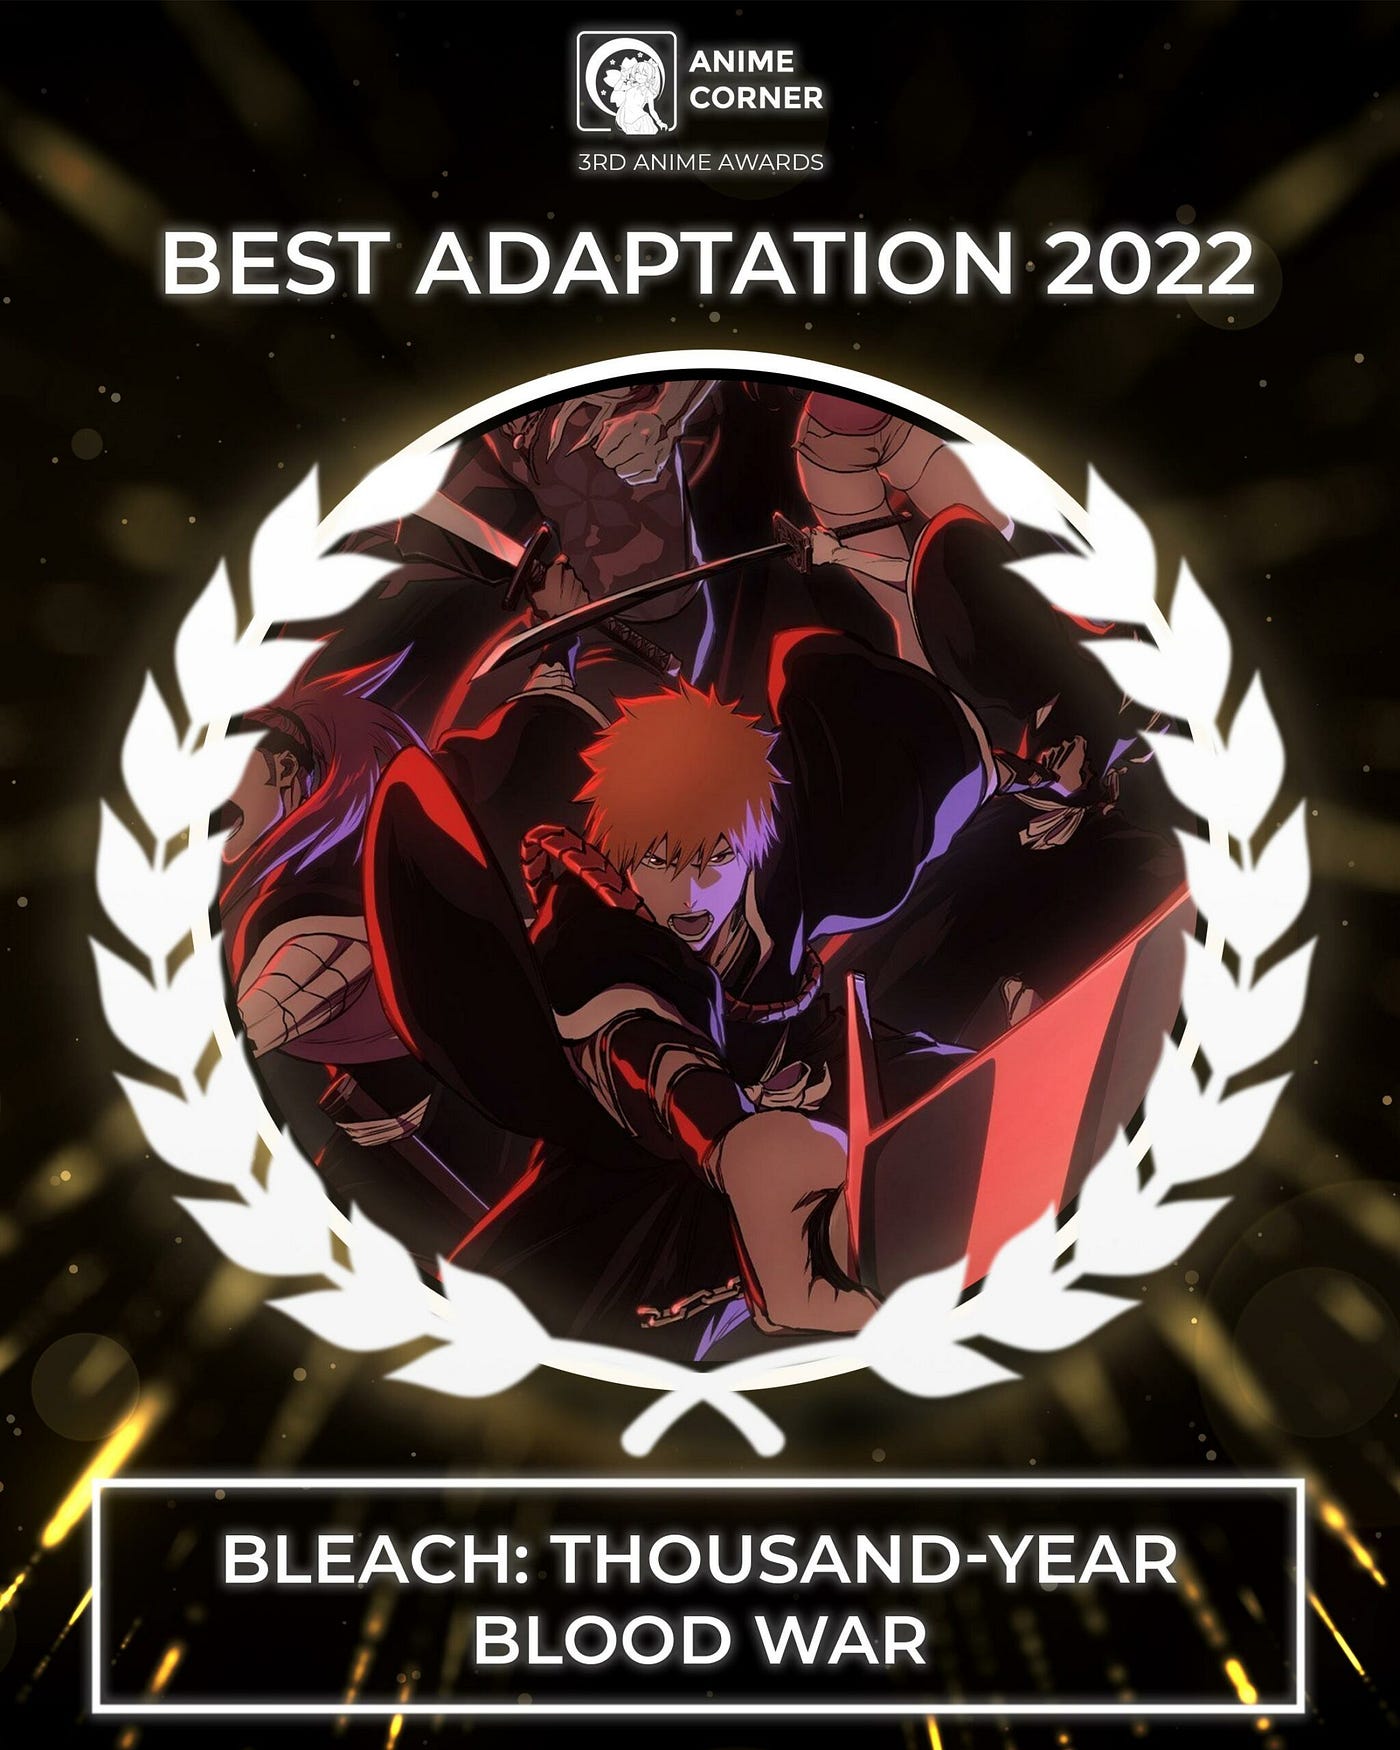 BLEACH: Thousand-Year Blood War Tops Fall 2022 Anime Ranking in Week 3 -  Anime Corner